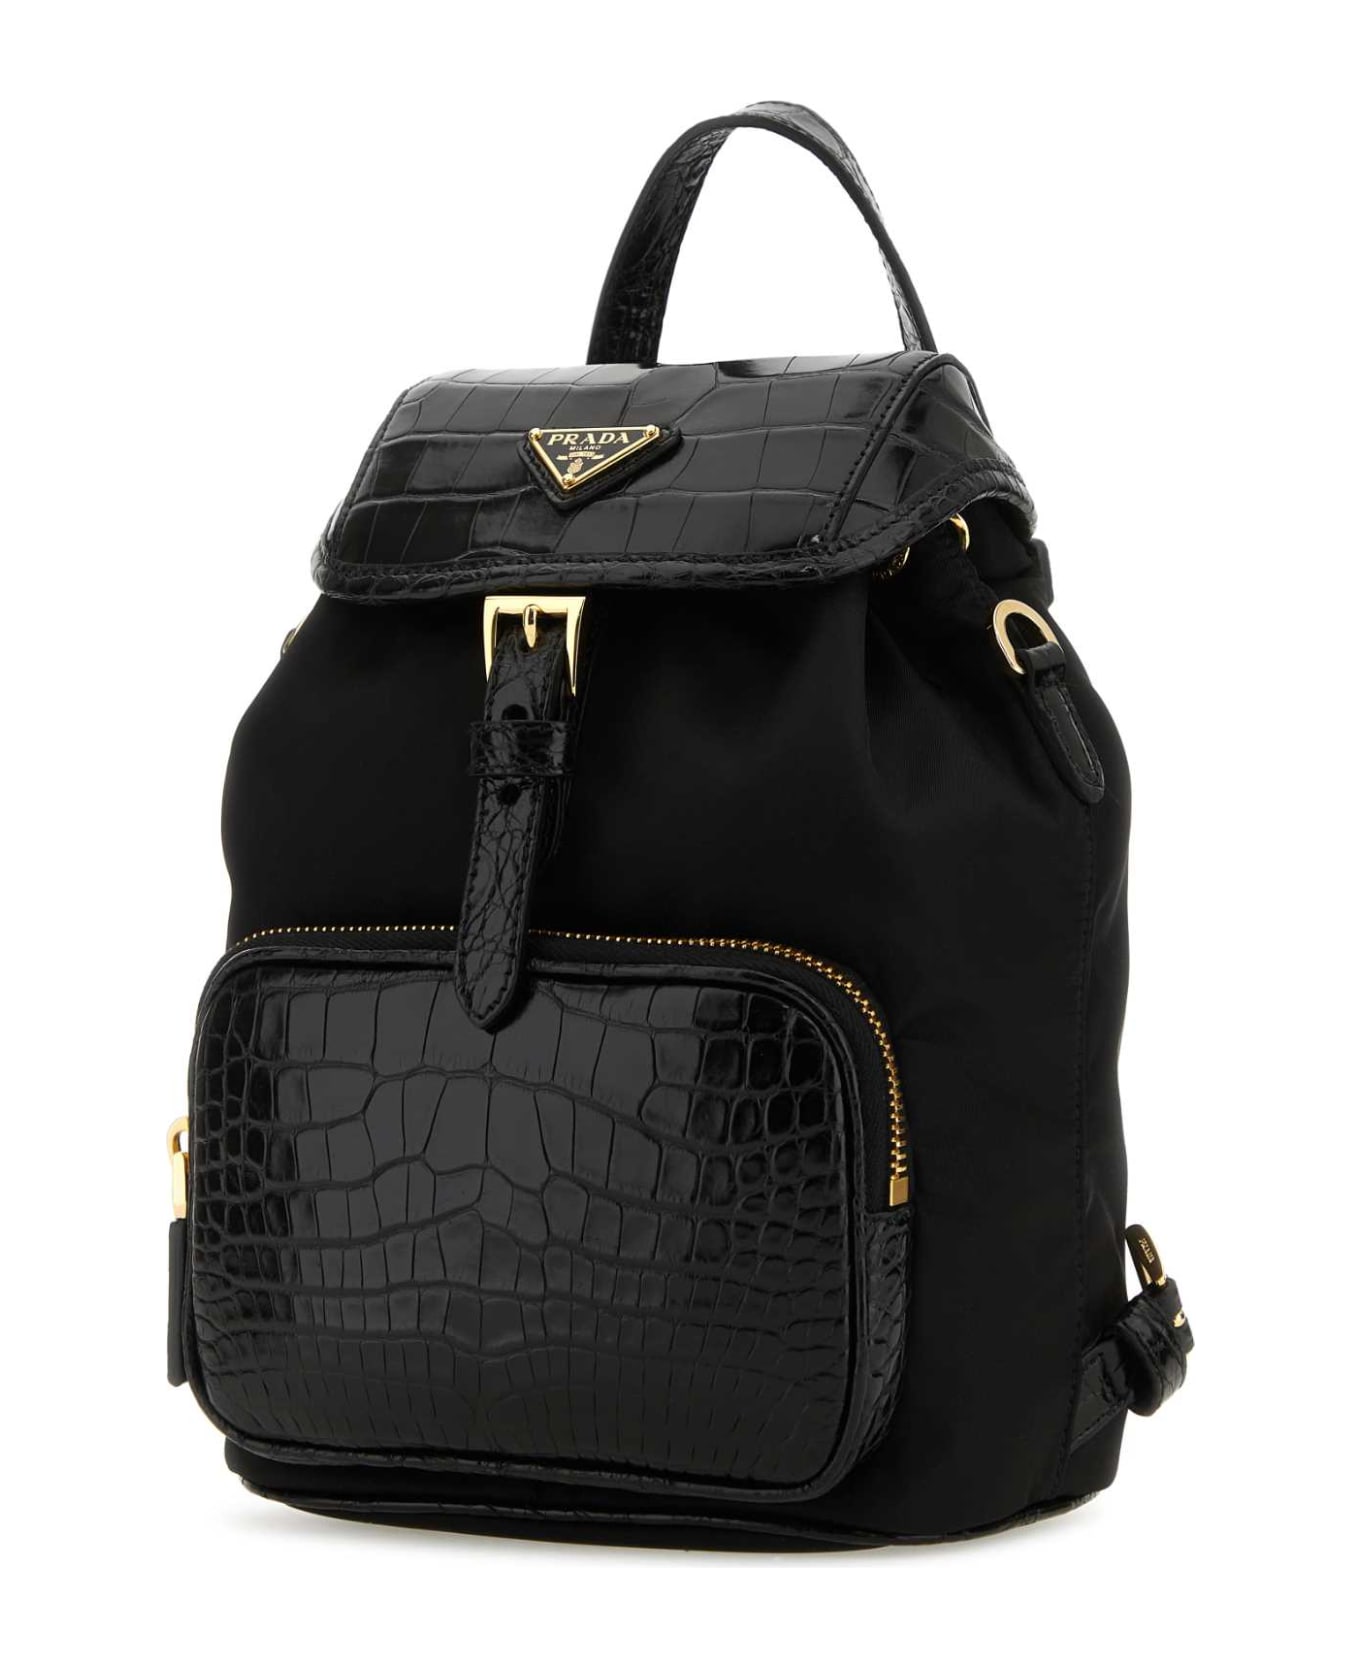 Prada Black Re-nylon And Leather Backpack - NERO